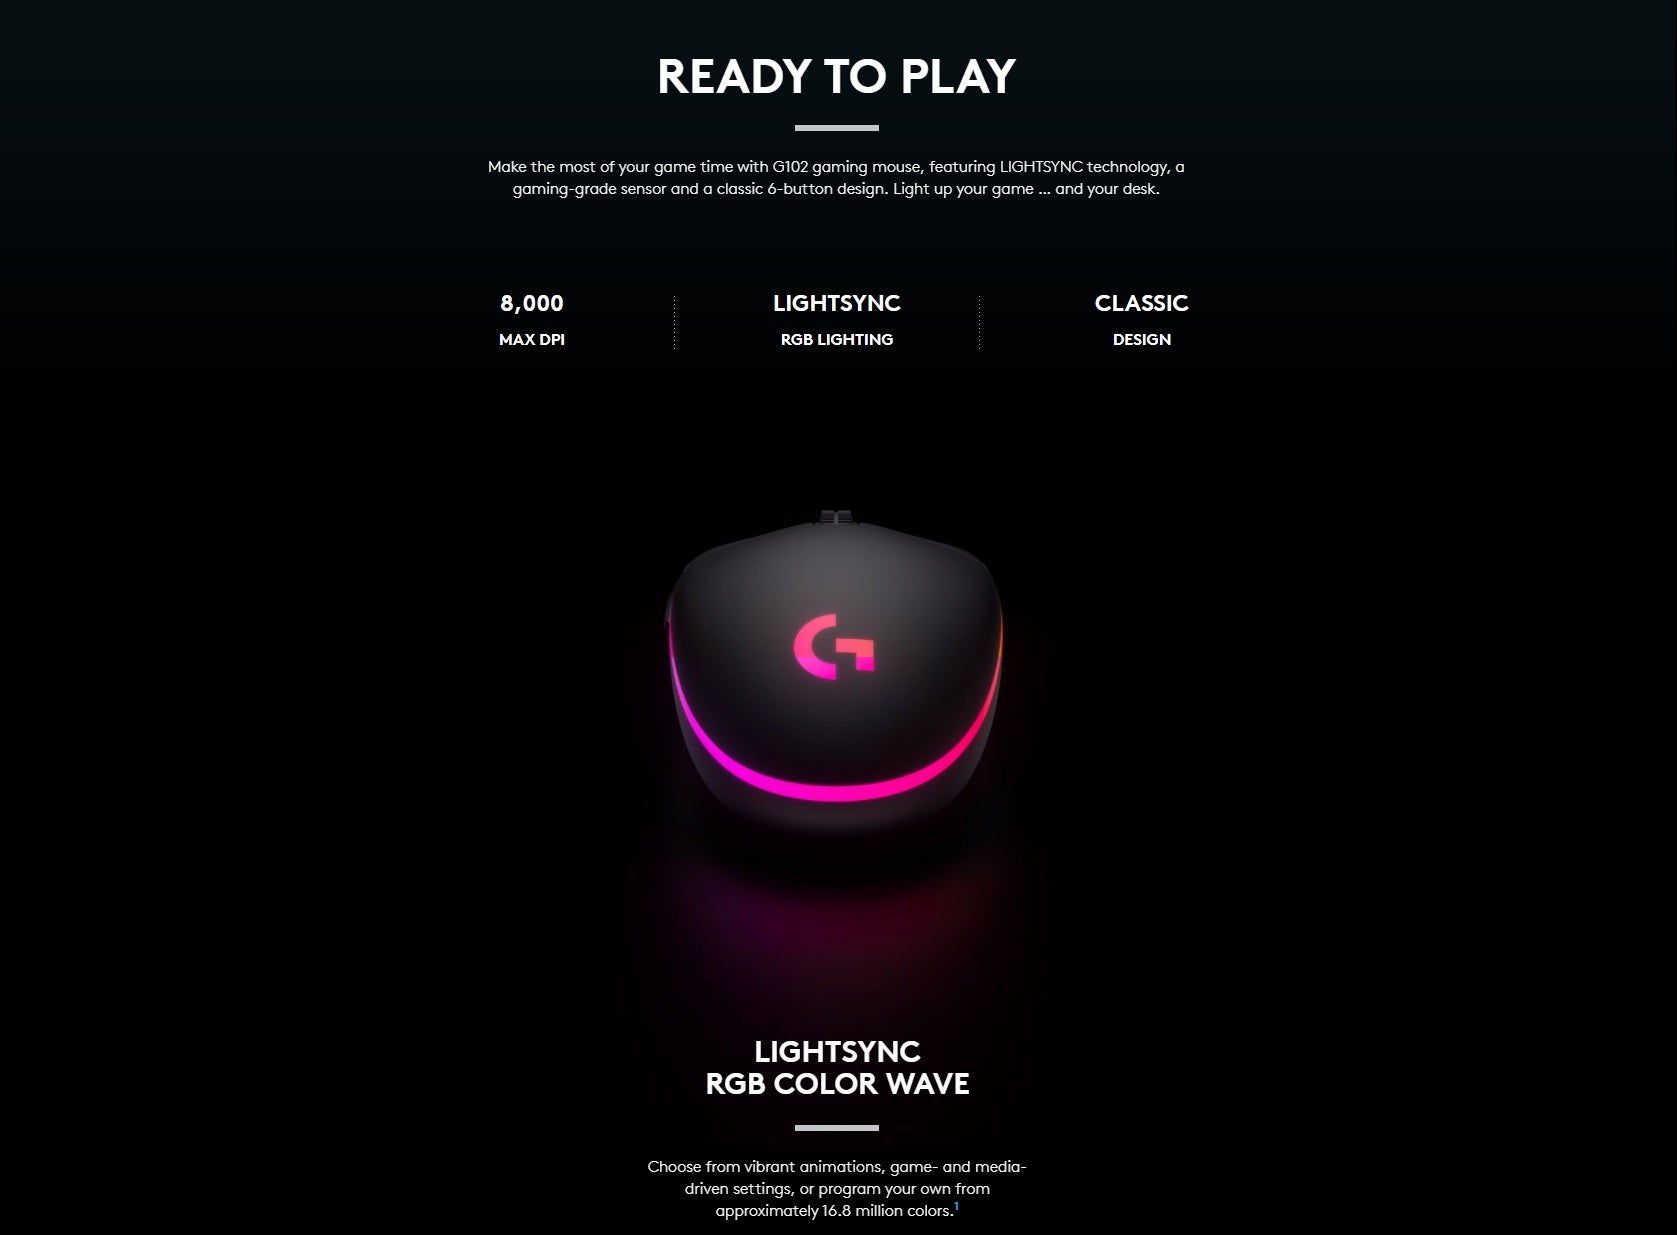 Logitech G102 (Black) Lightsync Gaming Mouse Price in Pakistan